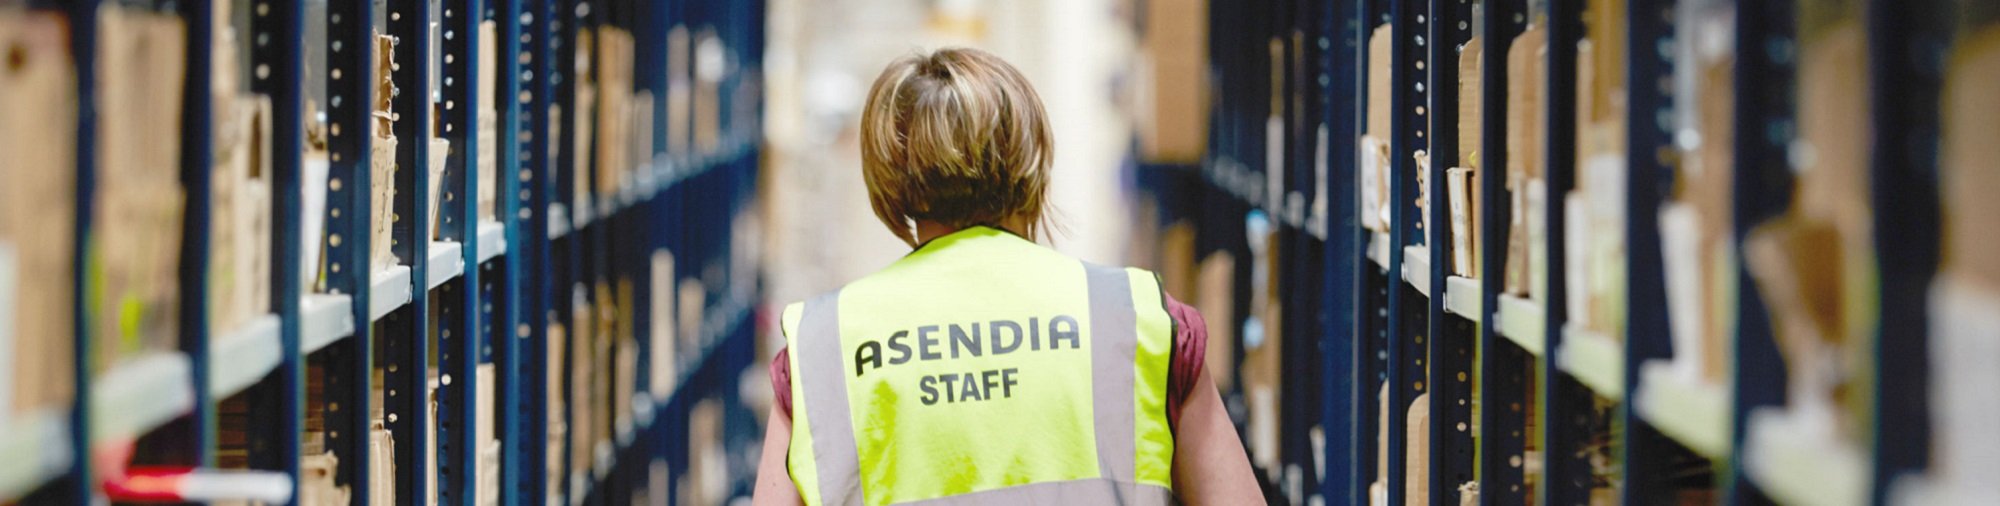 Asendia Careers header 500